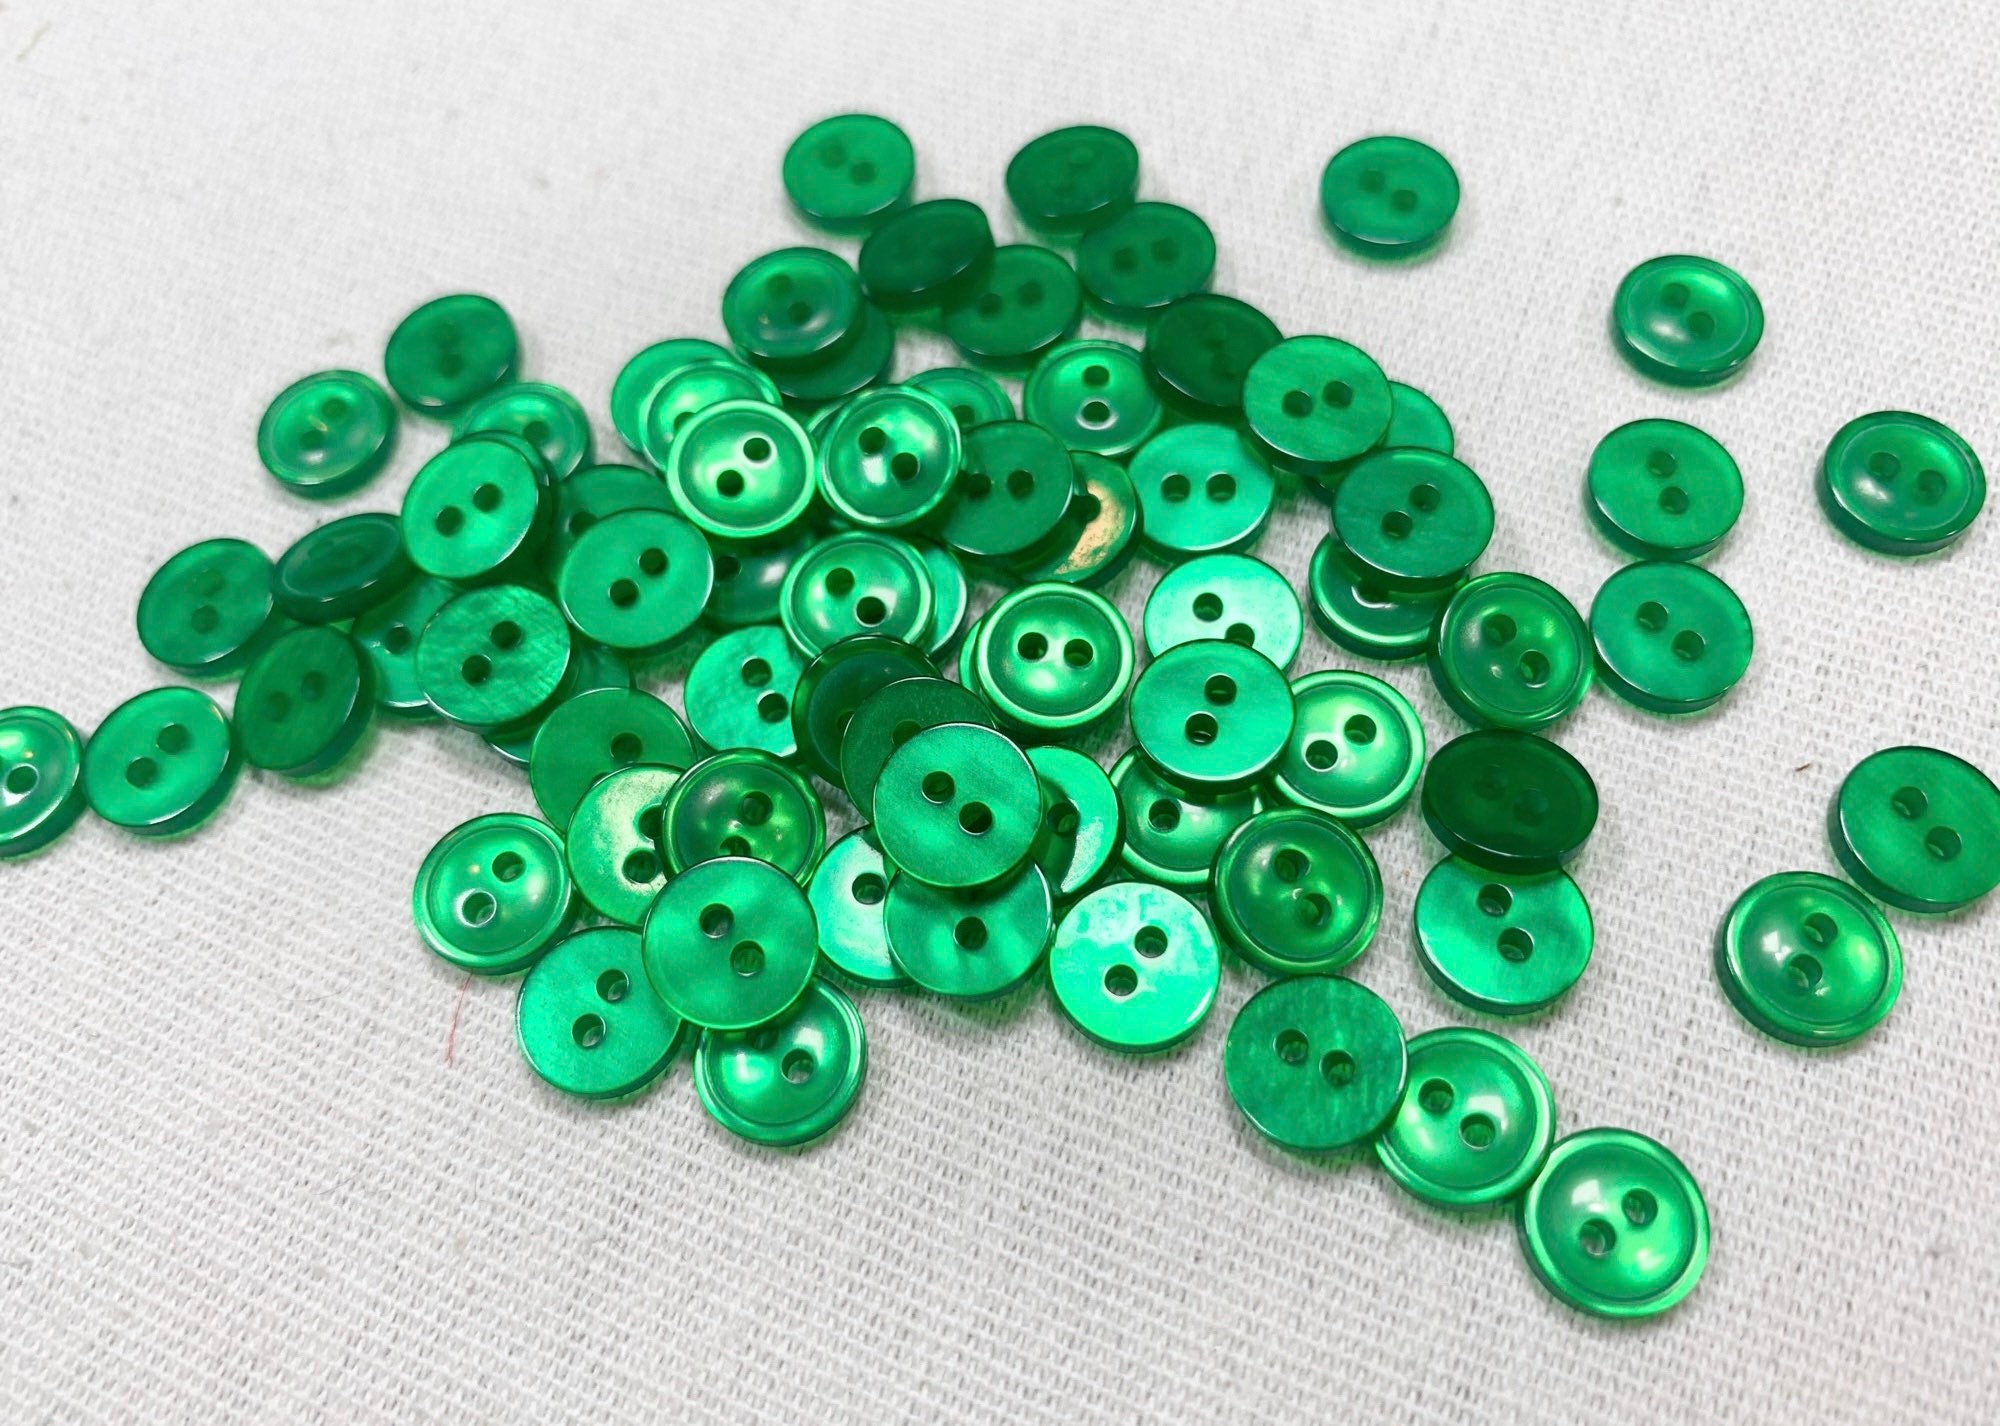  Chenkou Craft 50pcs Lots Mix Assorted Green Craft DIY Flatbacks  Resin Flat Back Buttons Scrapbooking (Green)